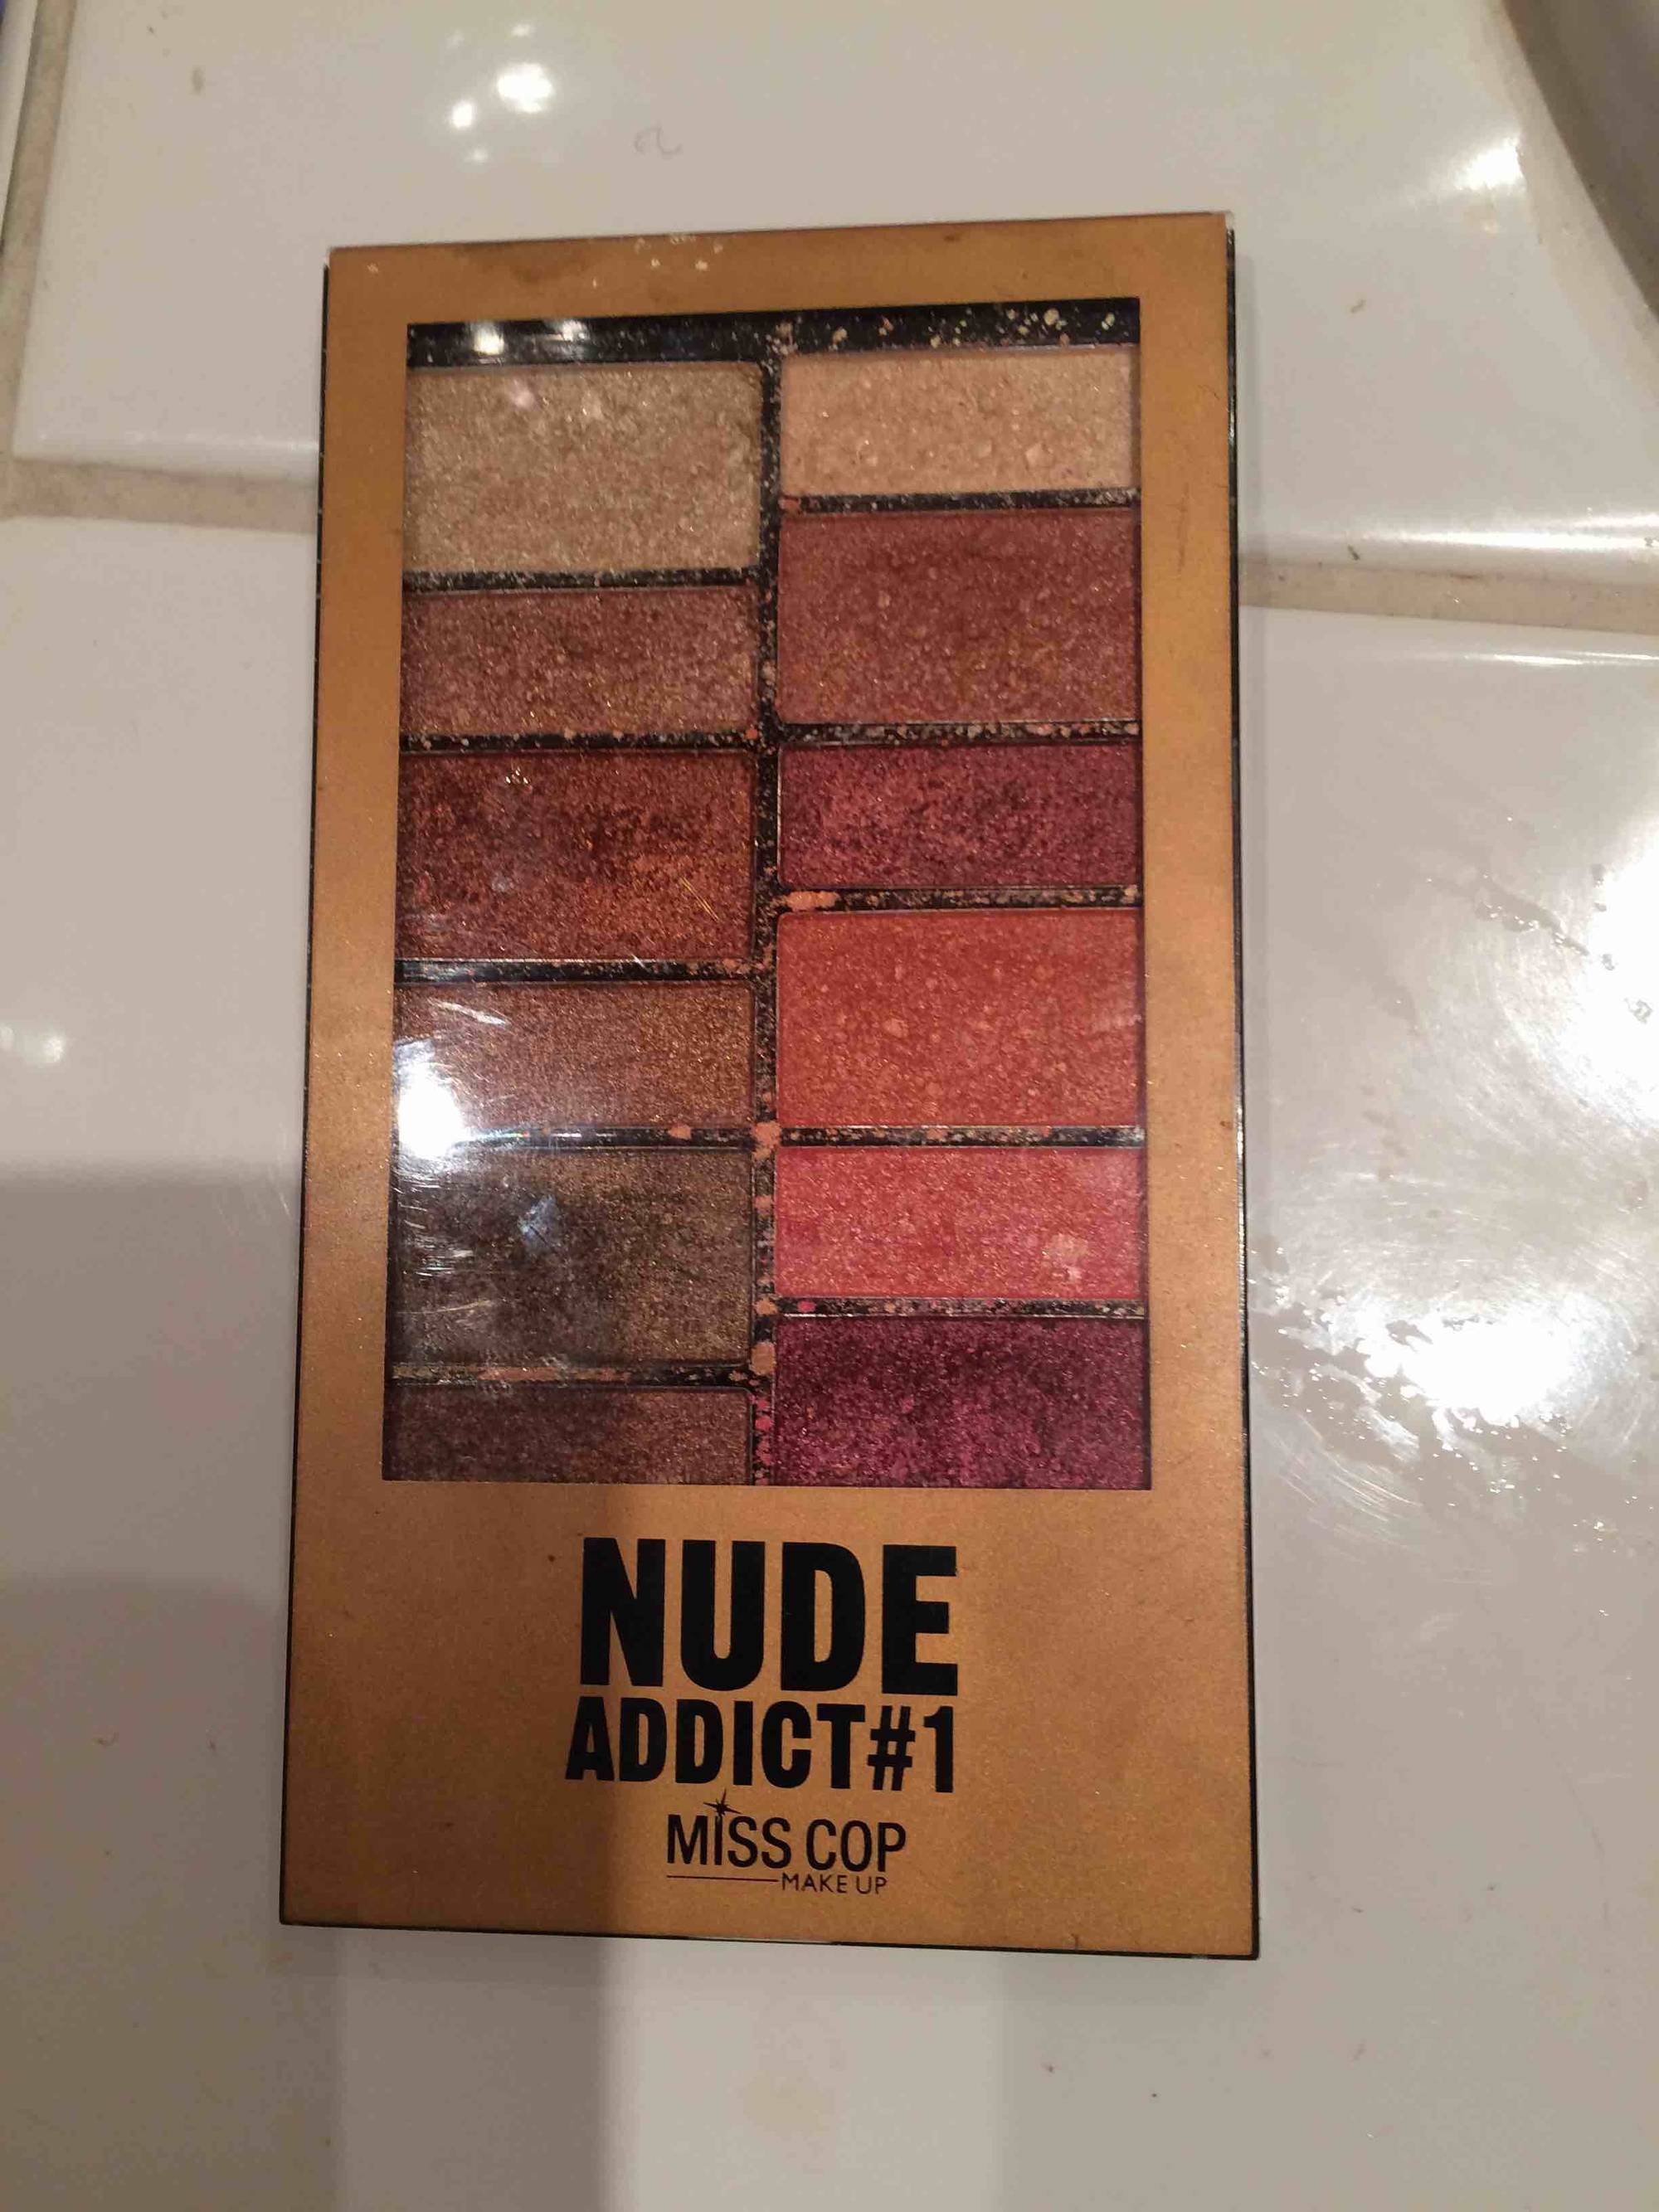 MISS COP - Nude addict 1 - Palette de maquillage